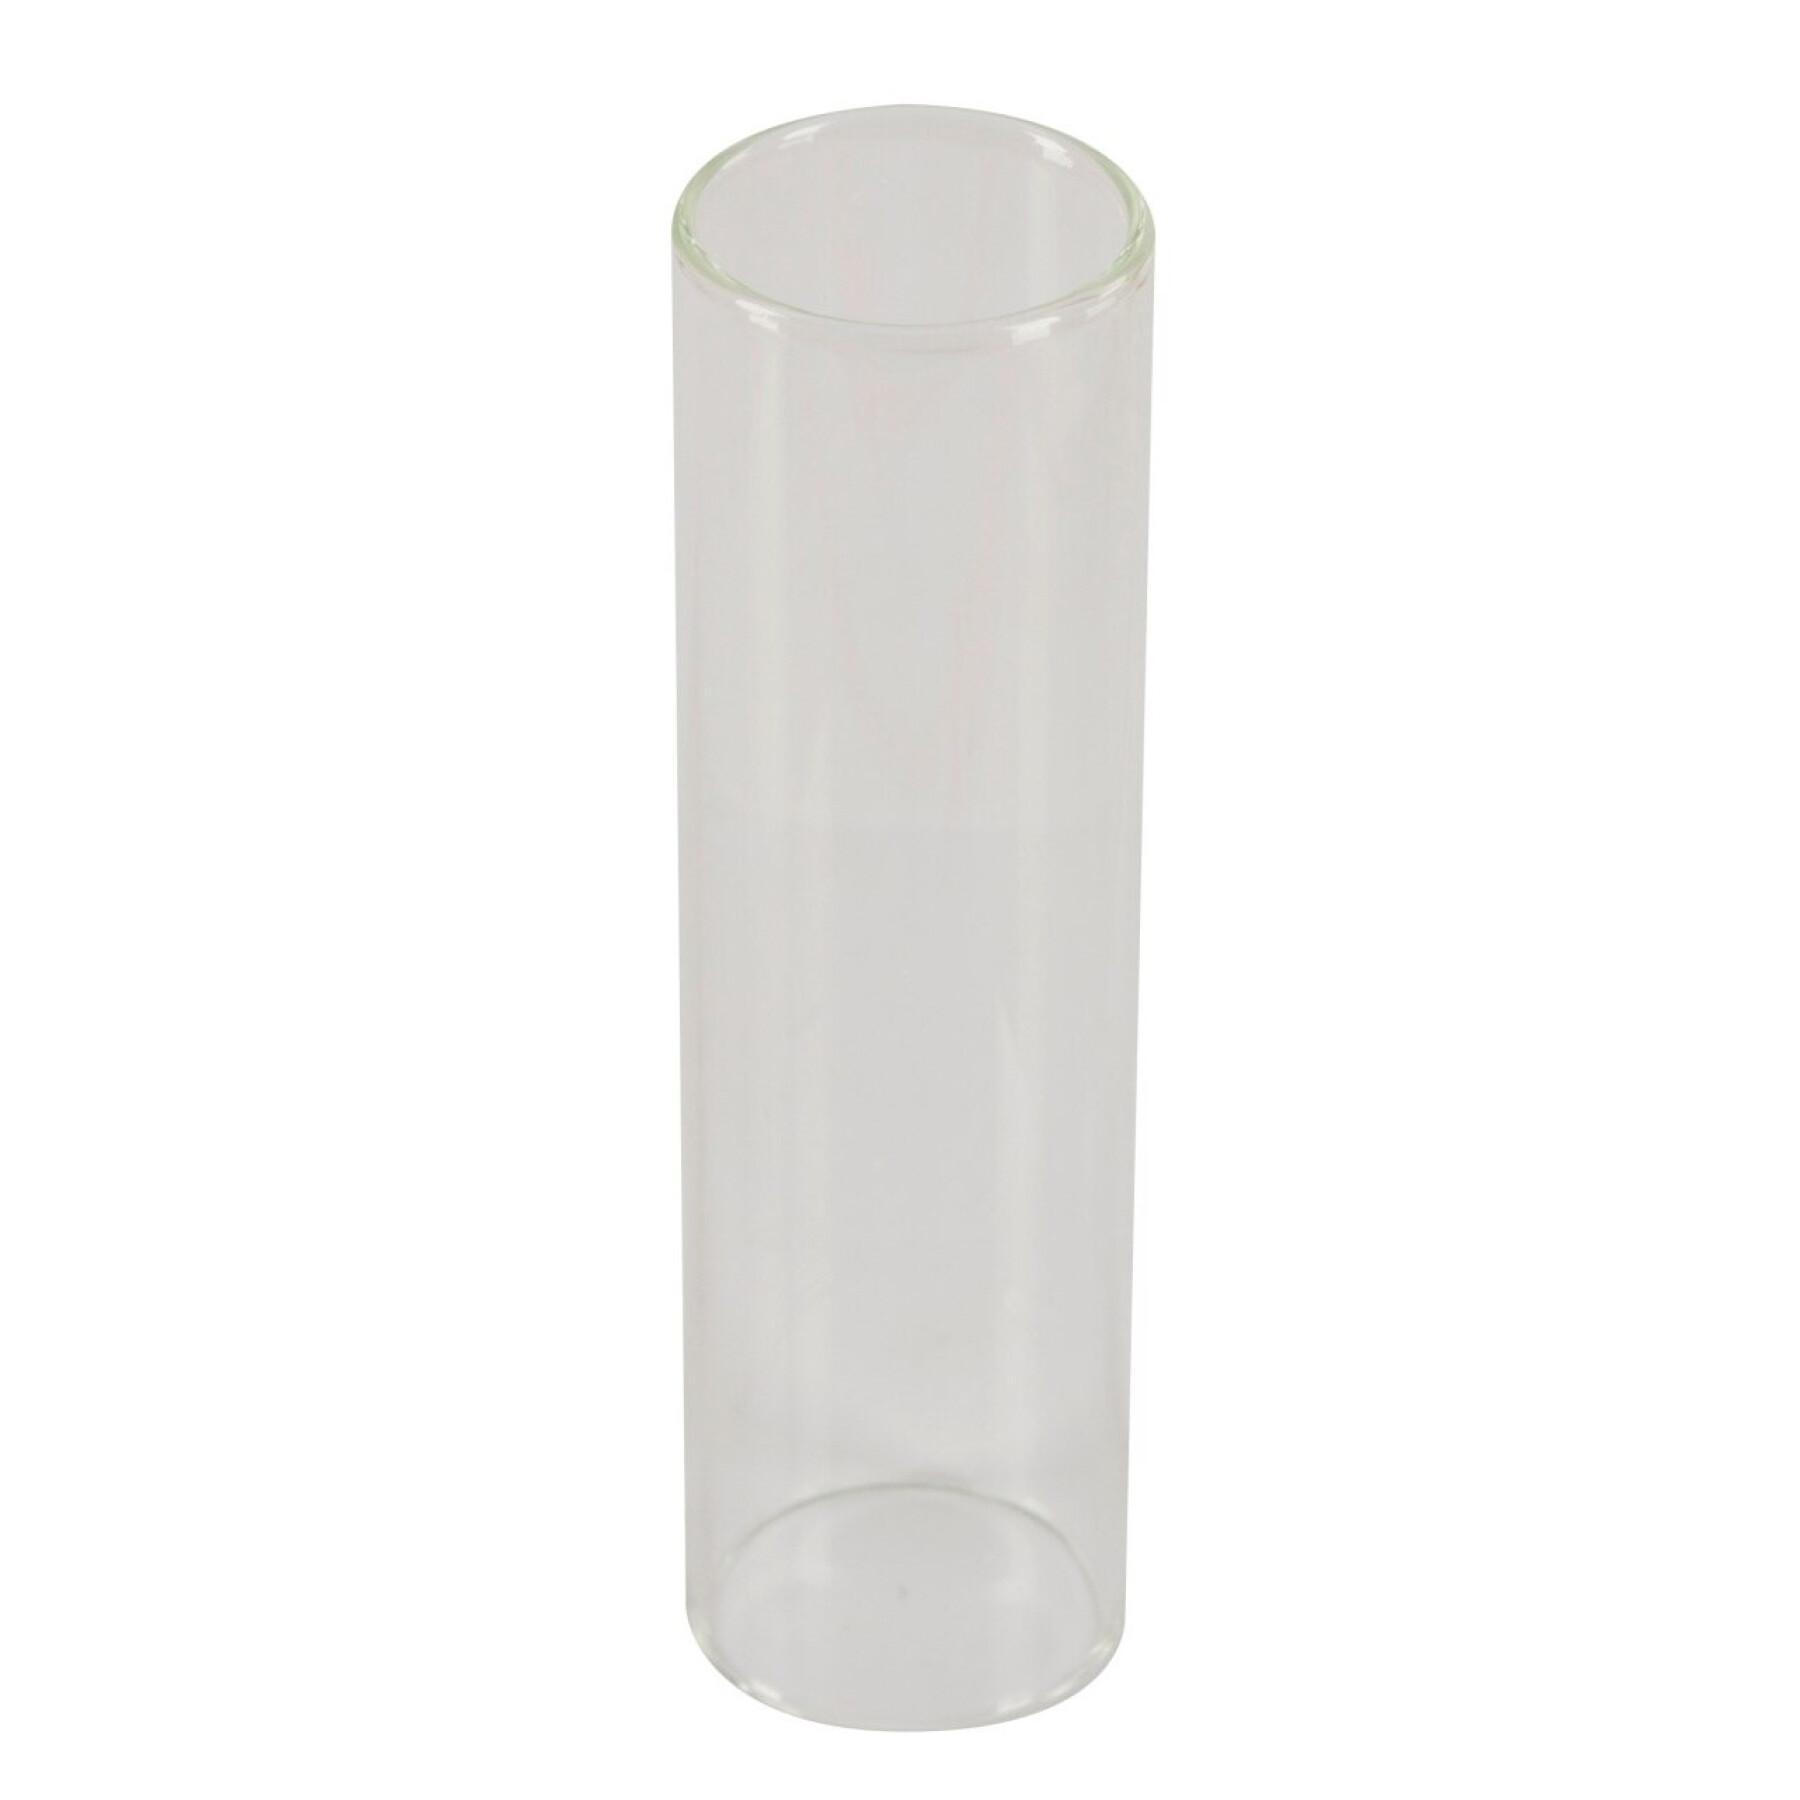 Replacement glass for hauptner syringe Kerbl